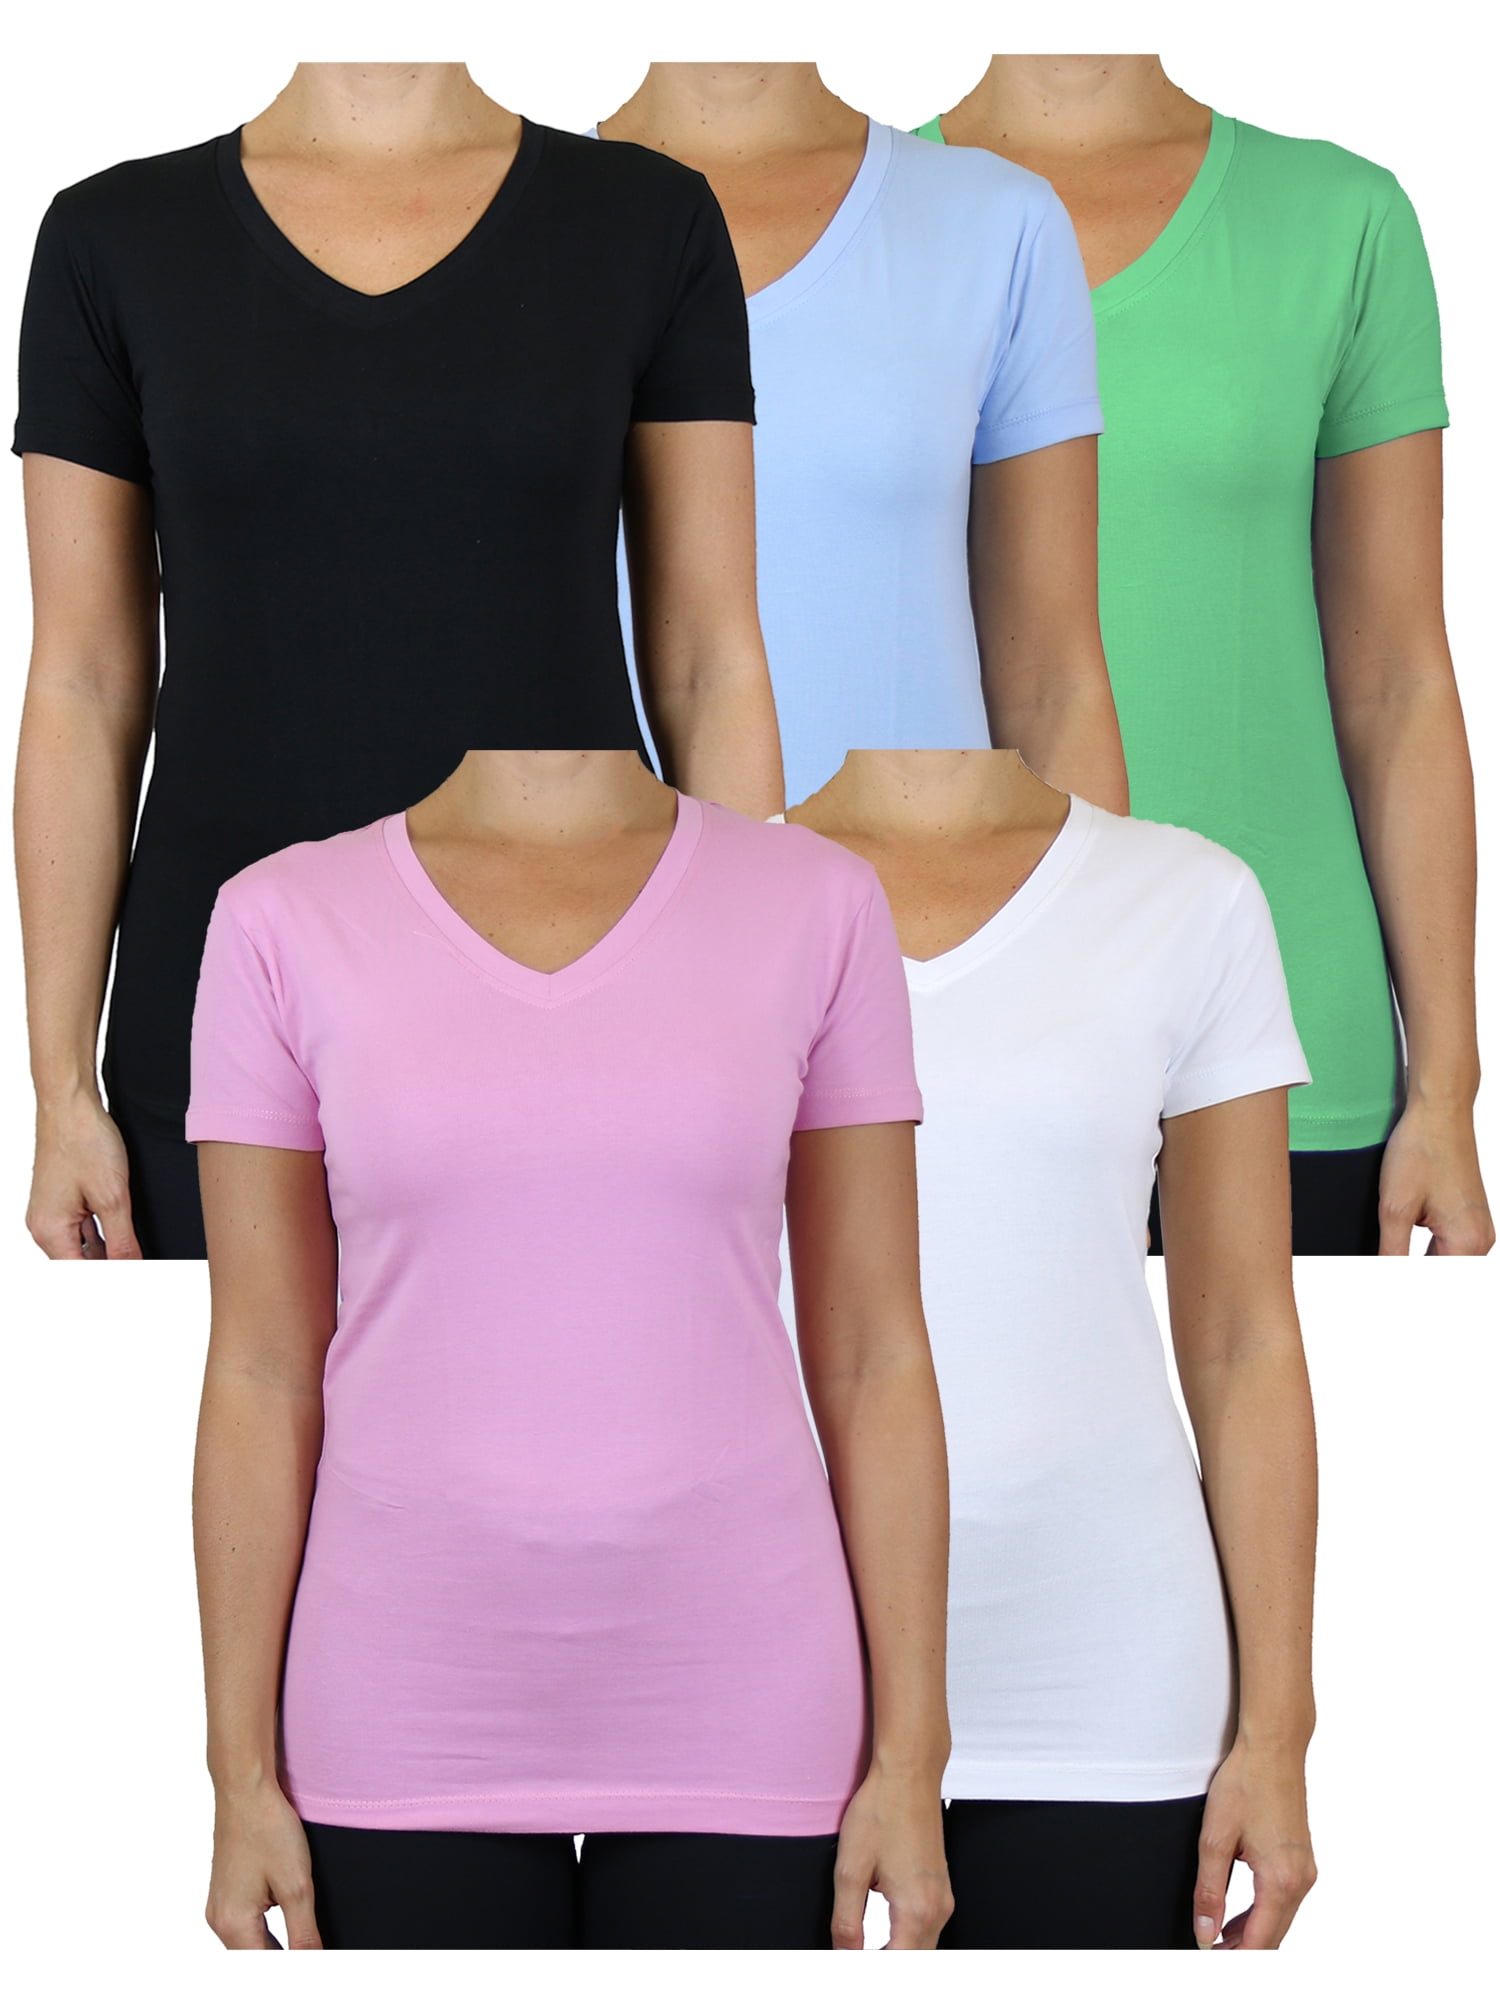 Women Basic Short Sleeve Stretch V-Neck Plain Top Solid Color T Shirt S-3XL 